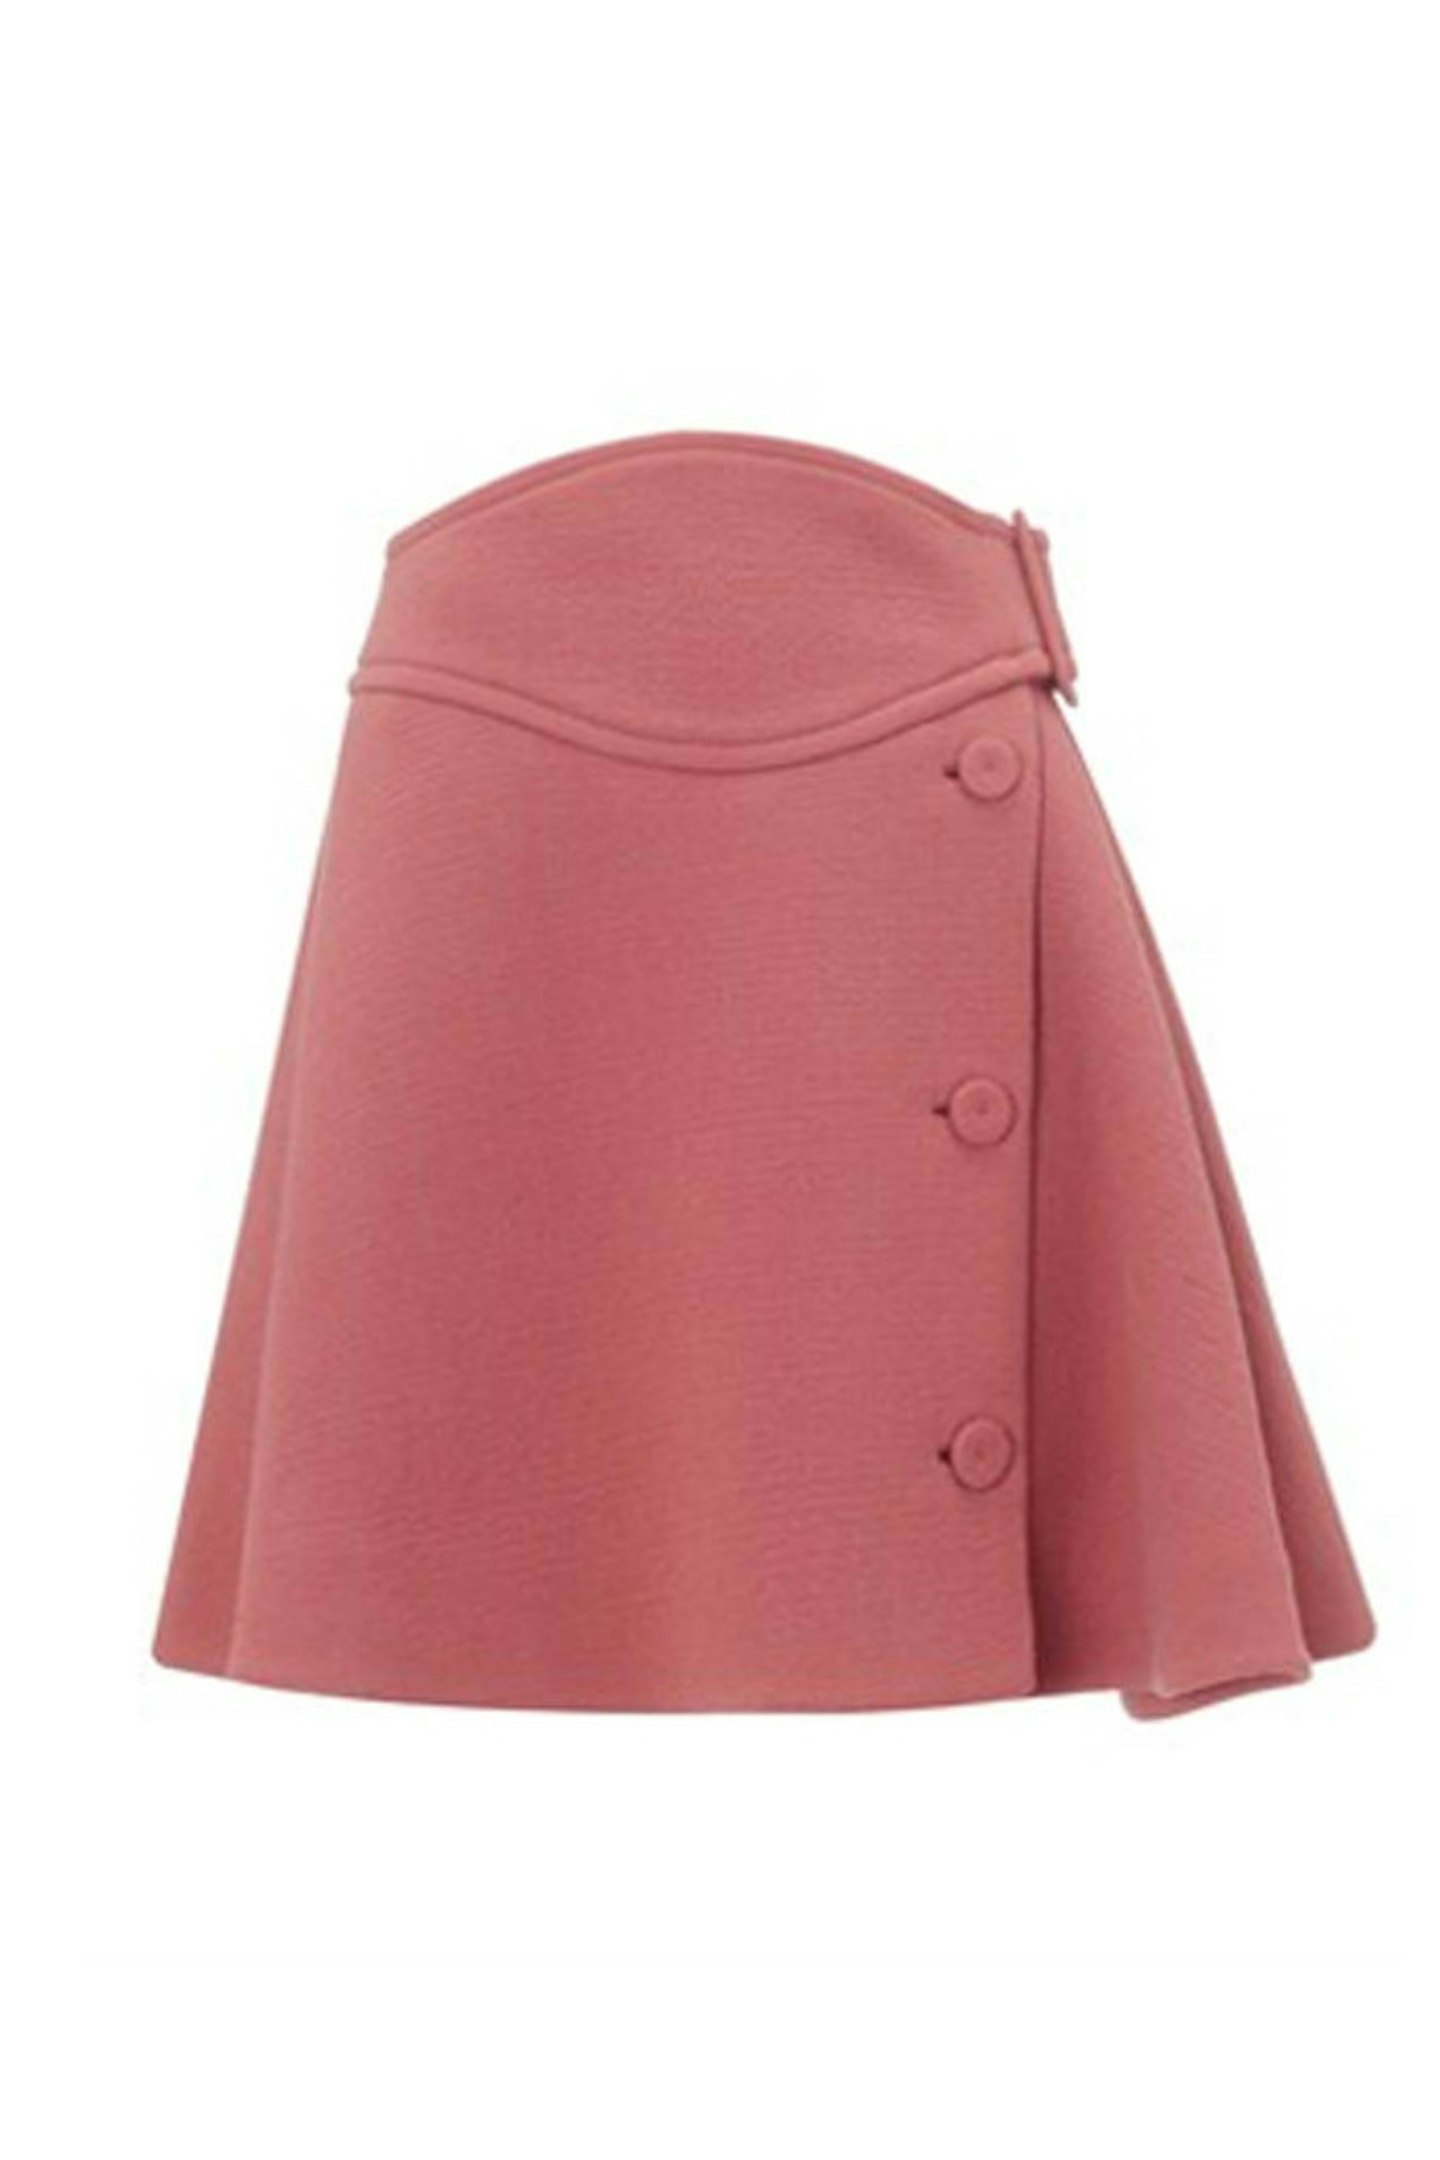 7. Pink wool skater skirt, £360, Carven at Avenue 32